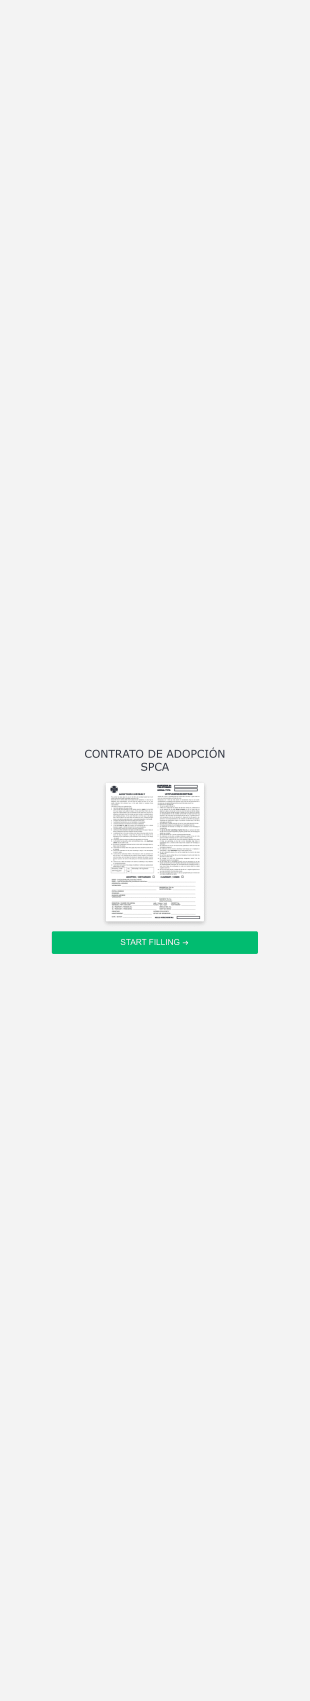 Contrato De Adopción Form Template